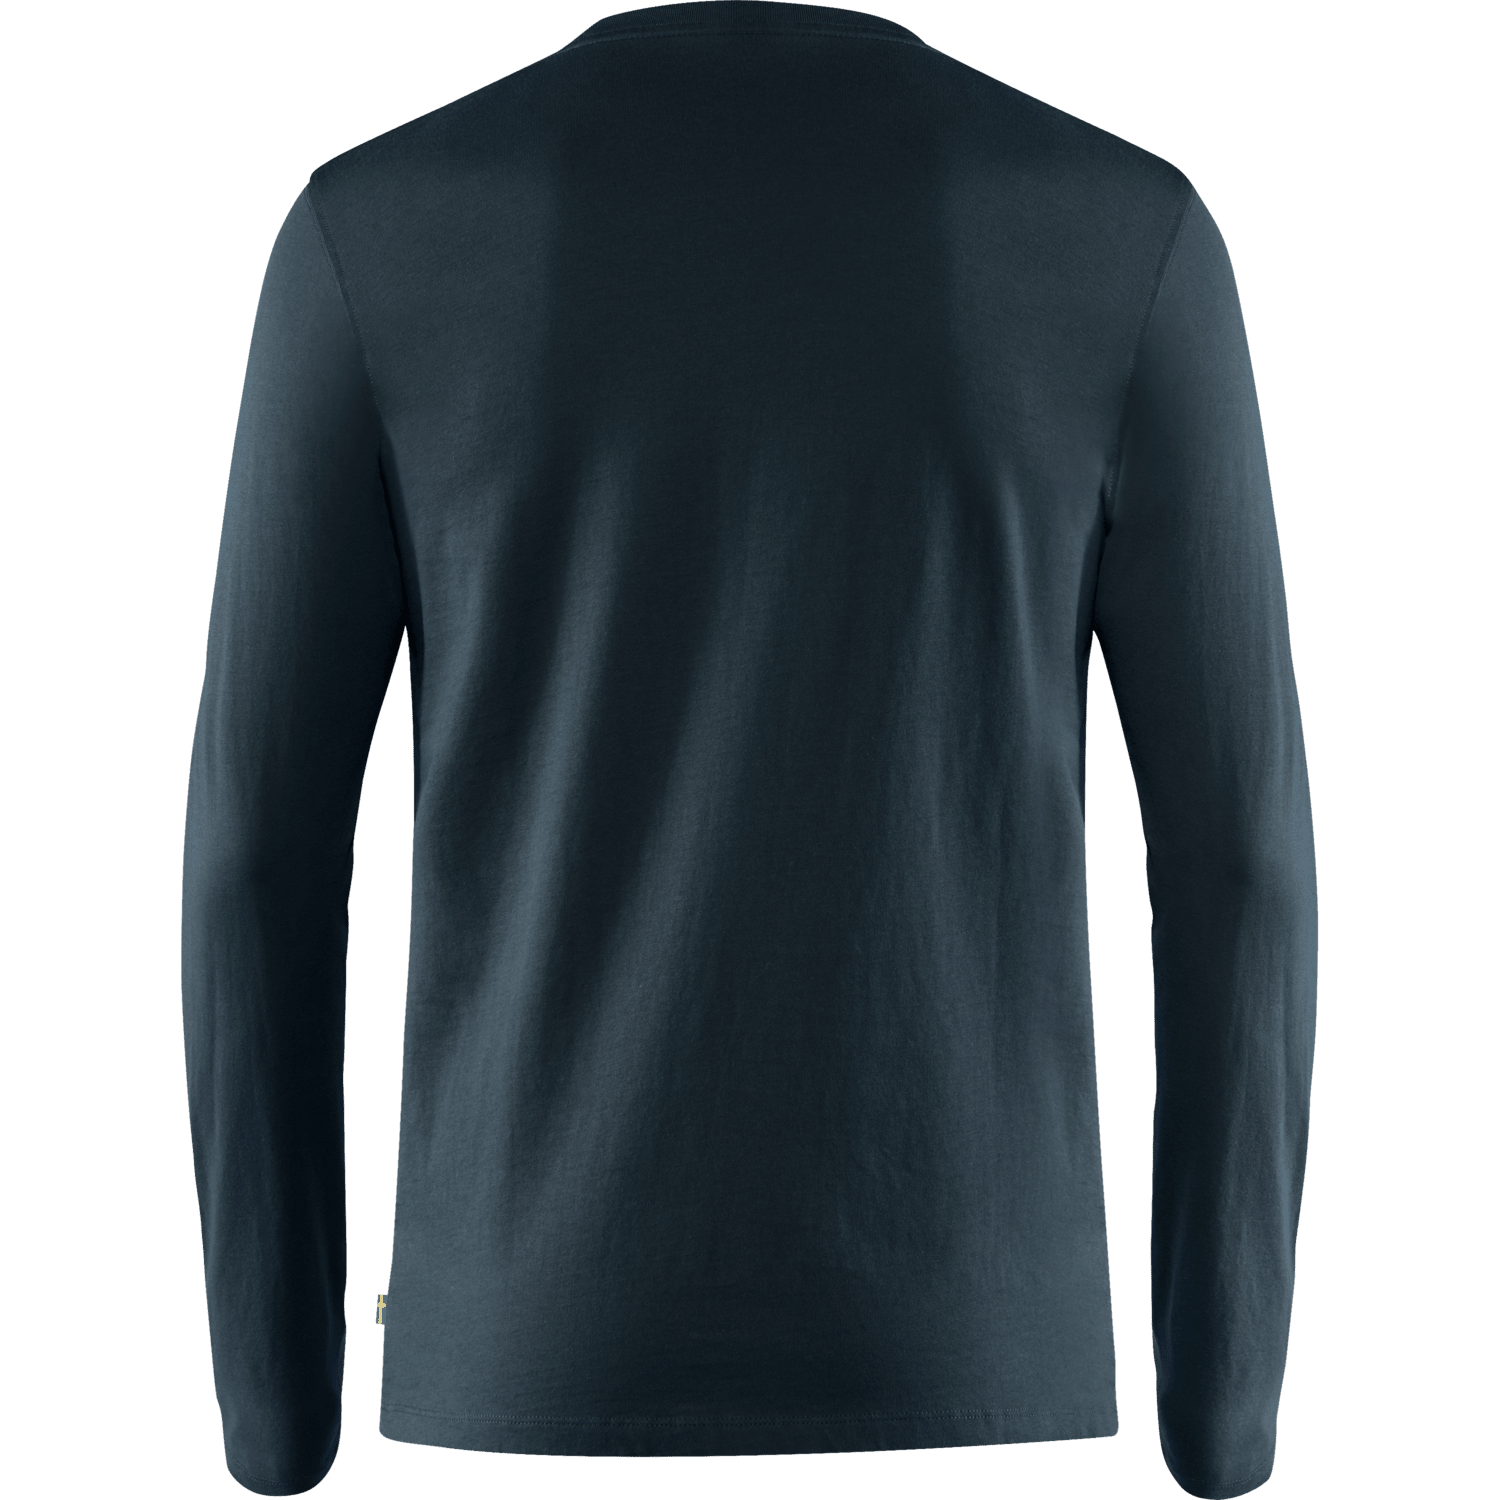 Fjällräven - M's Forever Nature Badge LS Shirt - 100% Organic Cotton - Weekendbee - sustainable sportswear